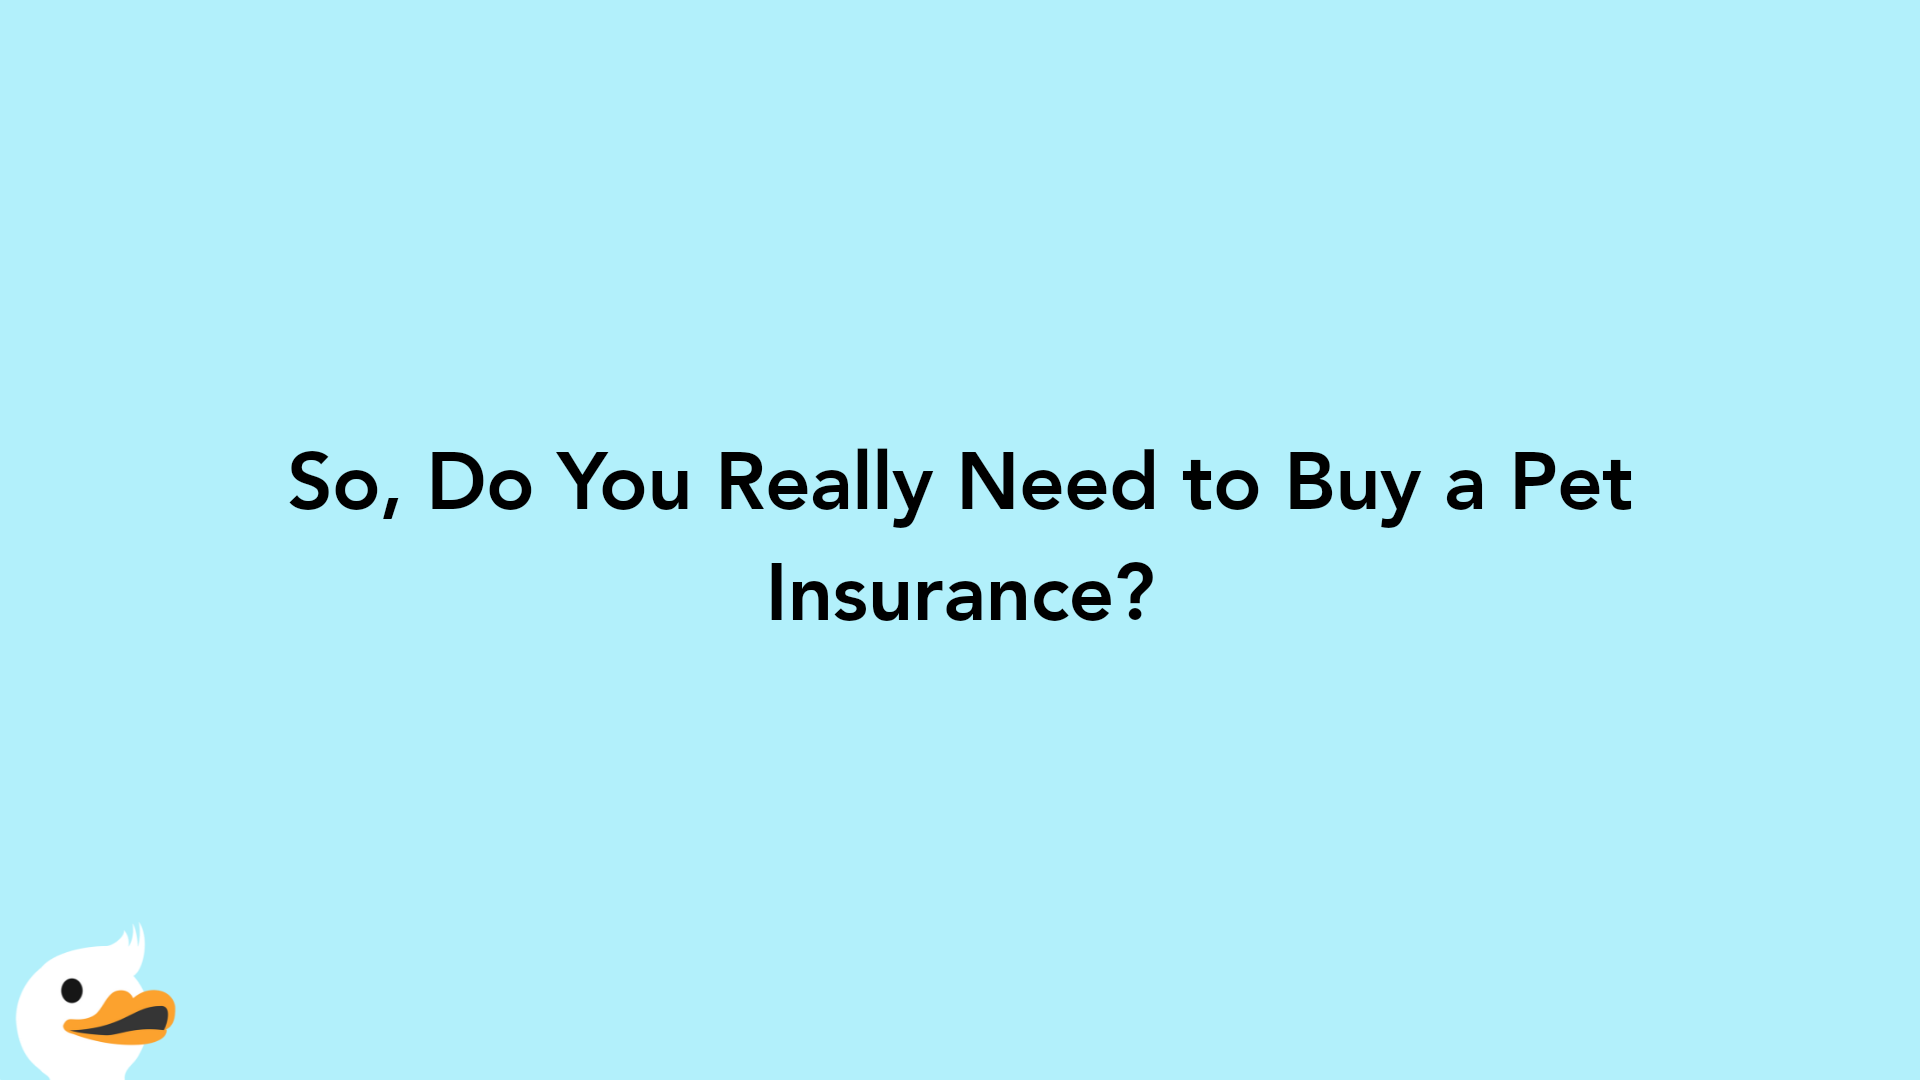 So, Do You Really Need to Buy a Pet Insurance?